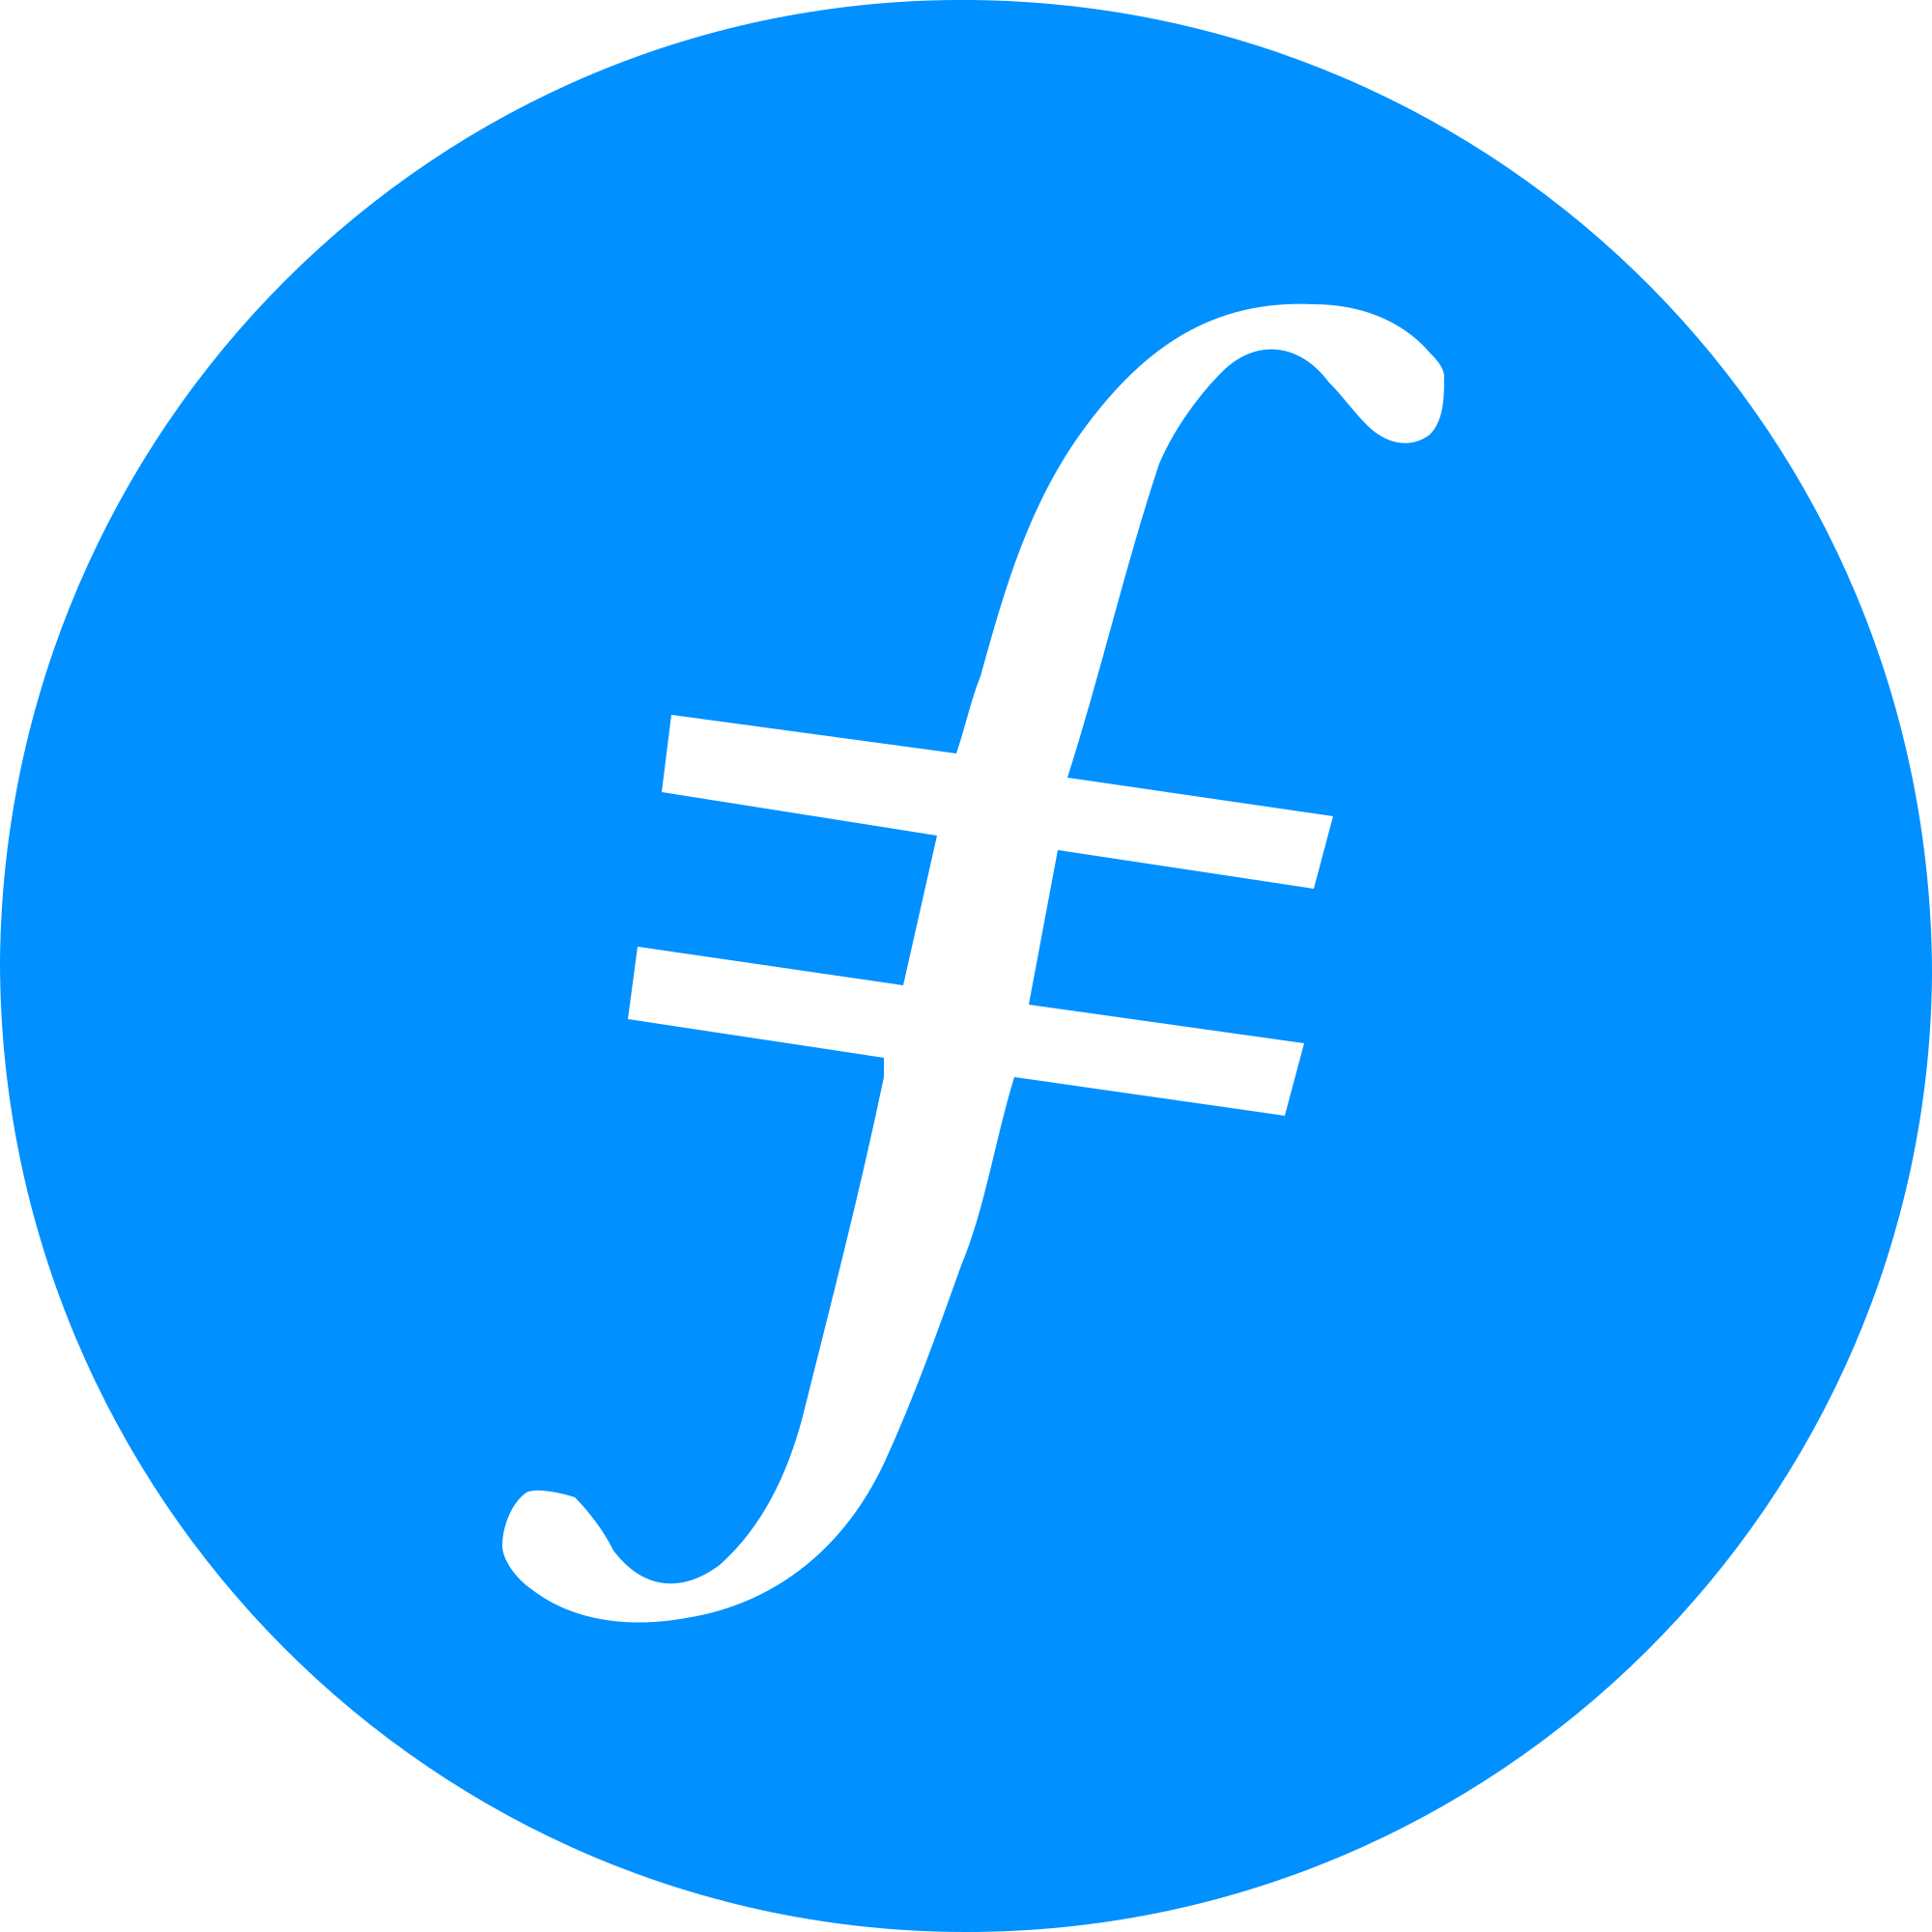 Filecoin's logo